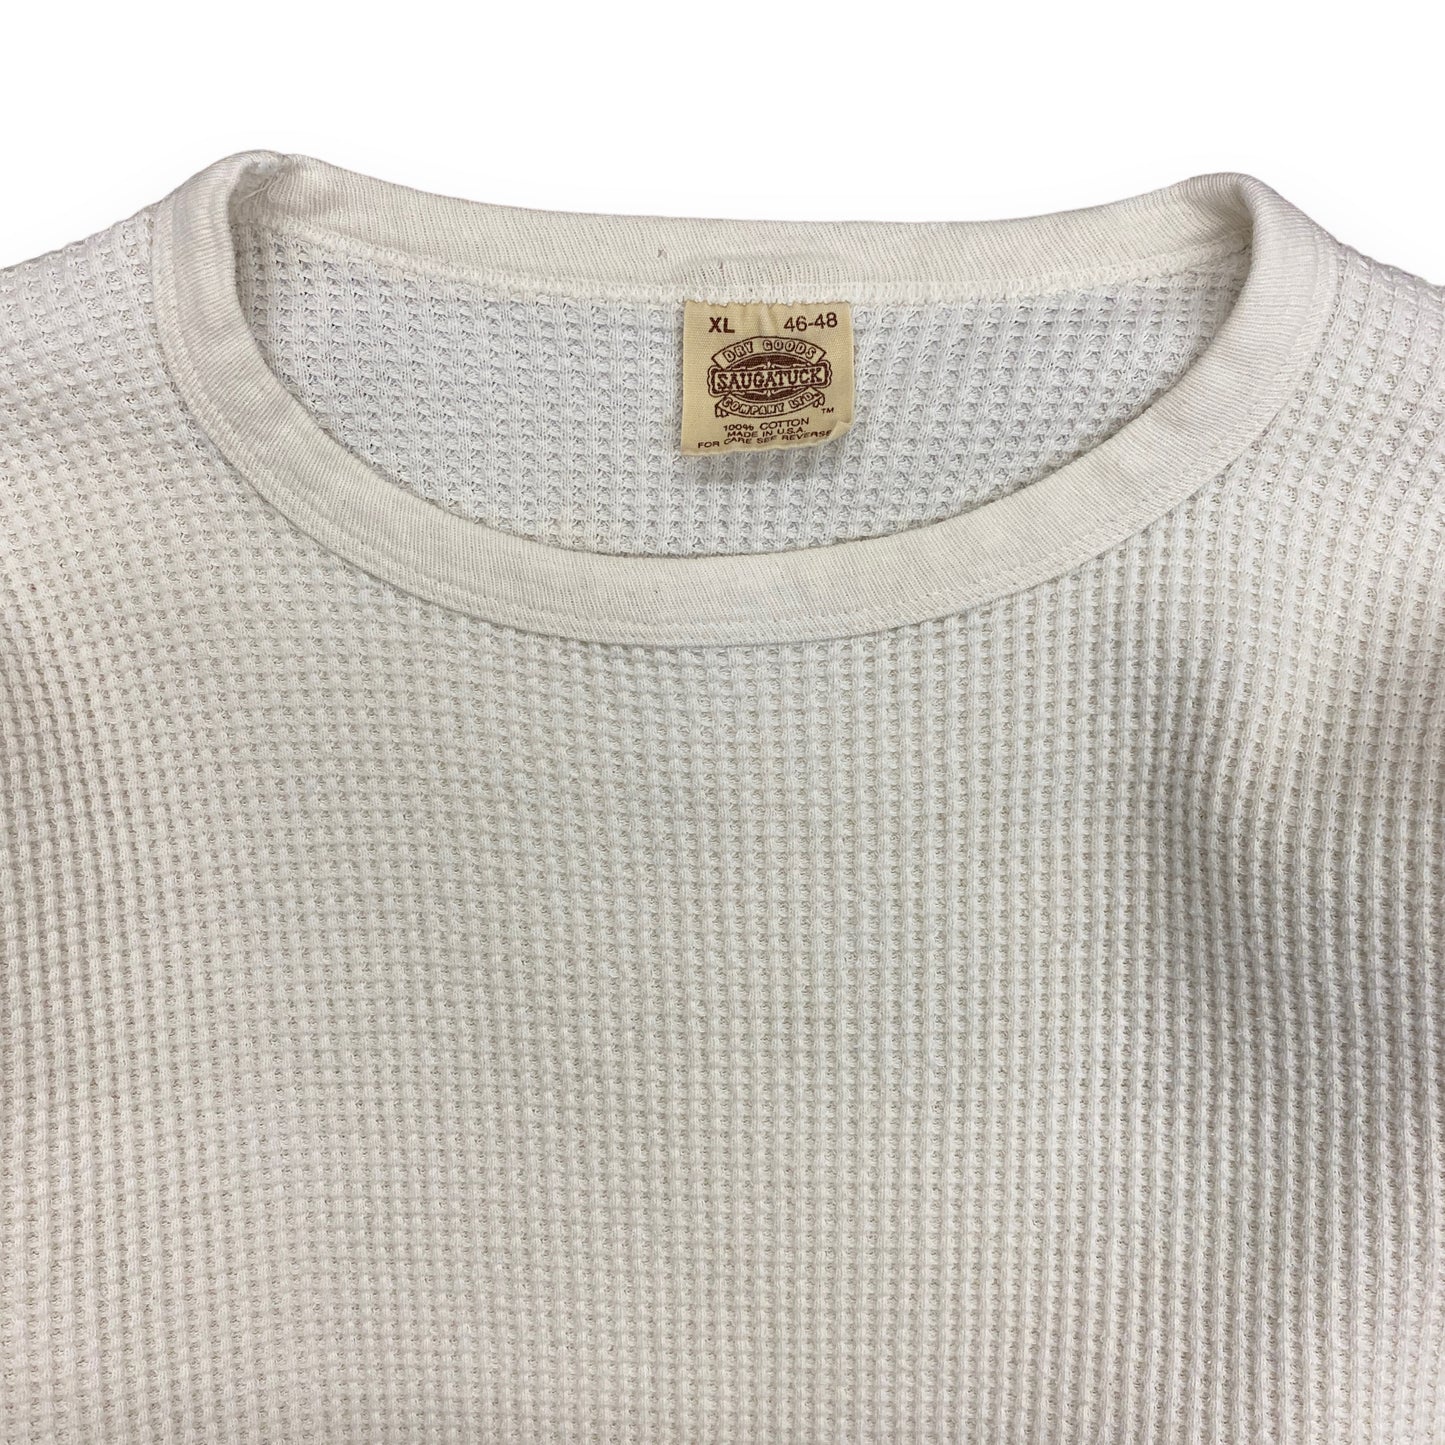 Vintage White Waffle Knit Thermal Shirt - Size XL